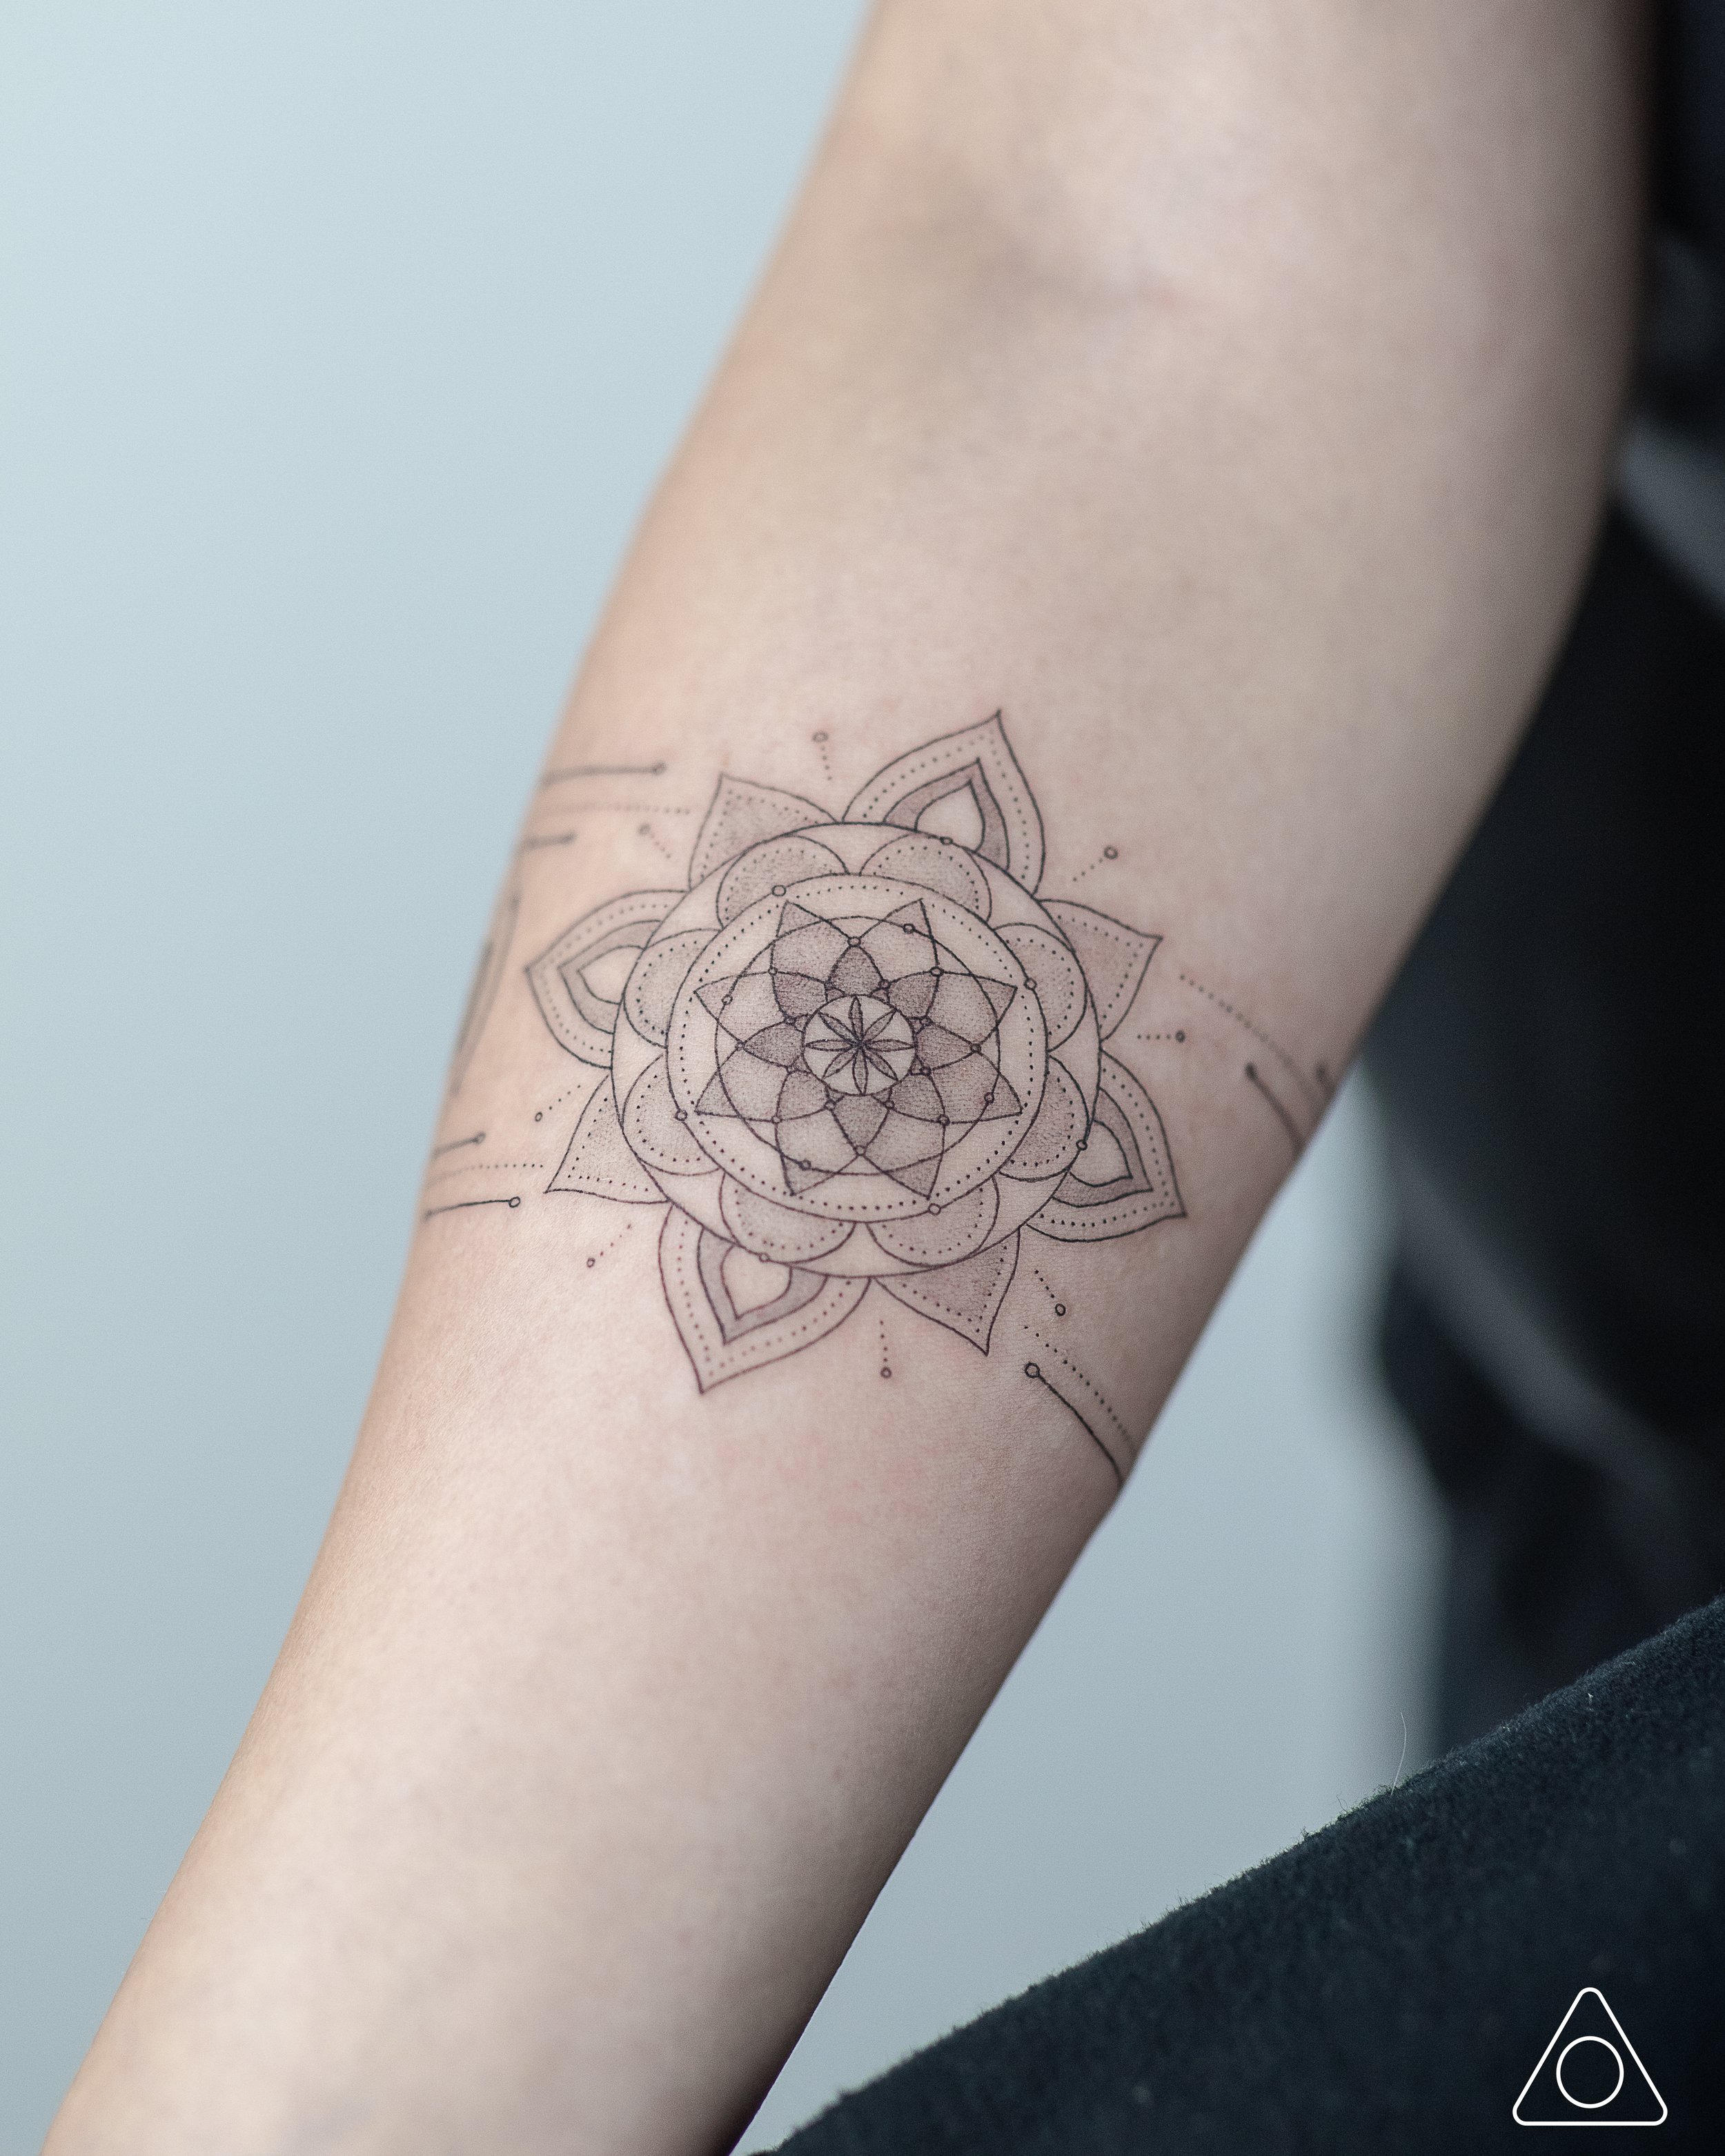 Cosmic landscape armband tattoo - Tattoogrid.net